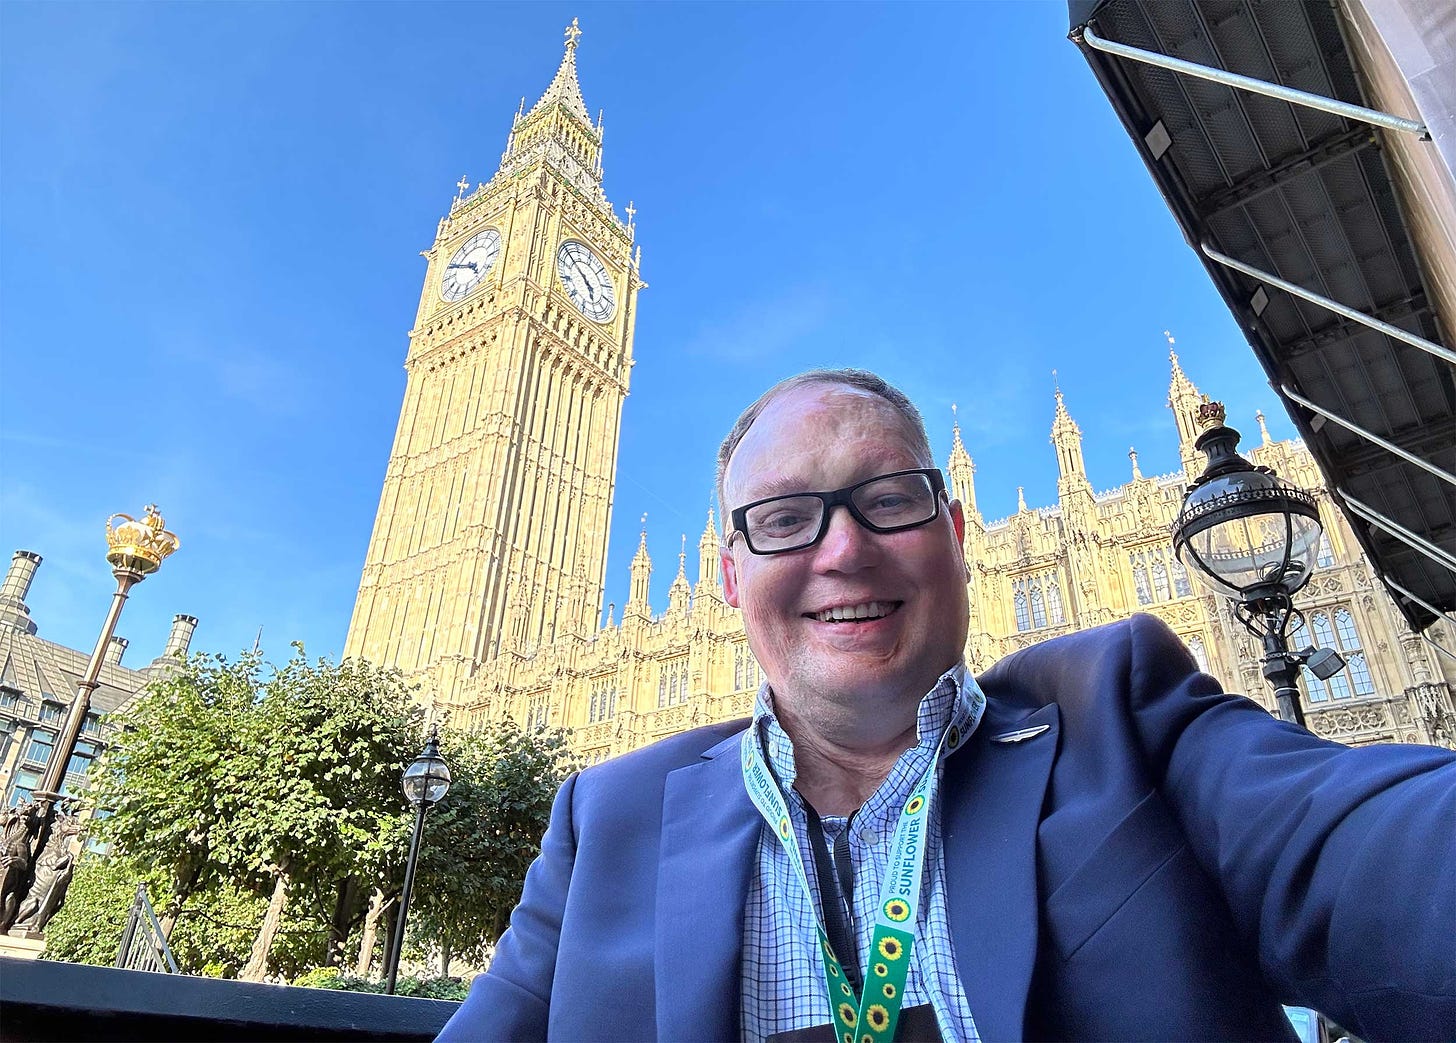 John taking a selfie in front of the Big Ben clock tower.